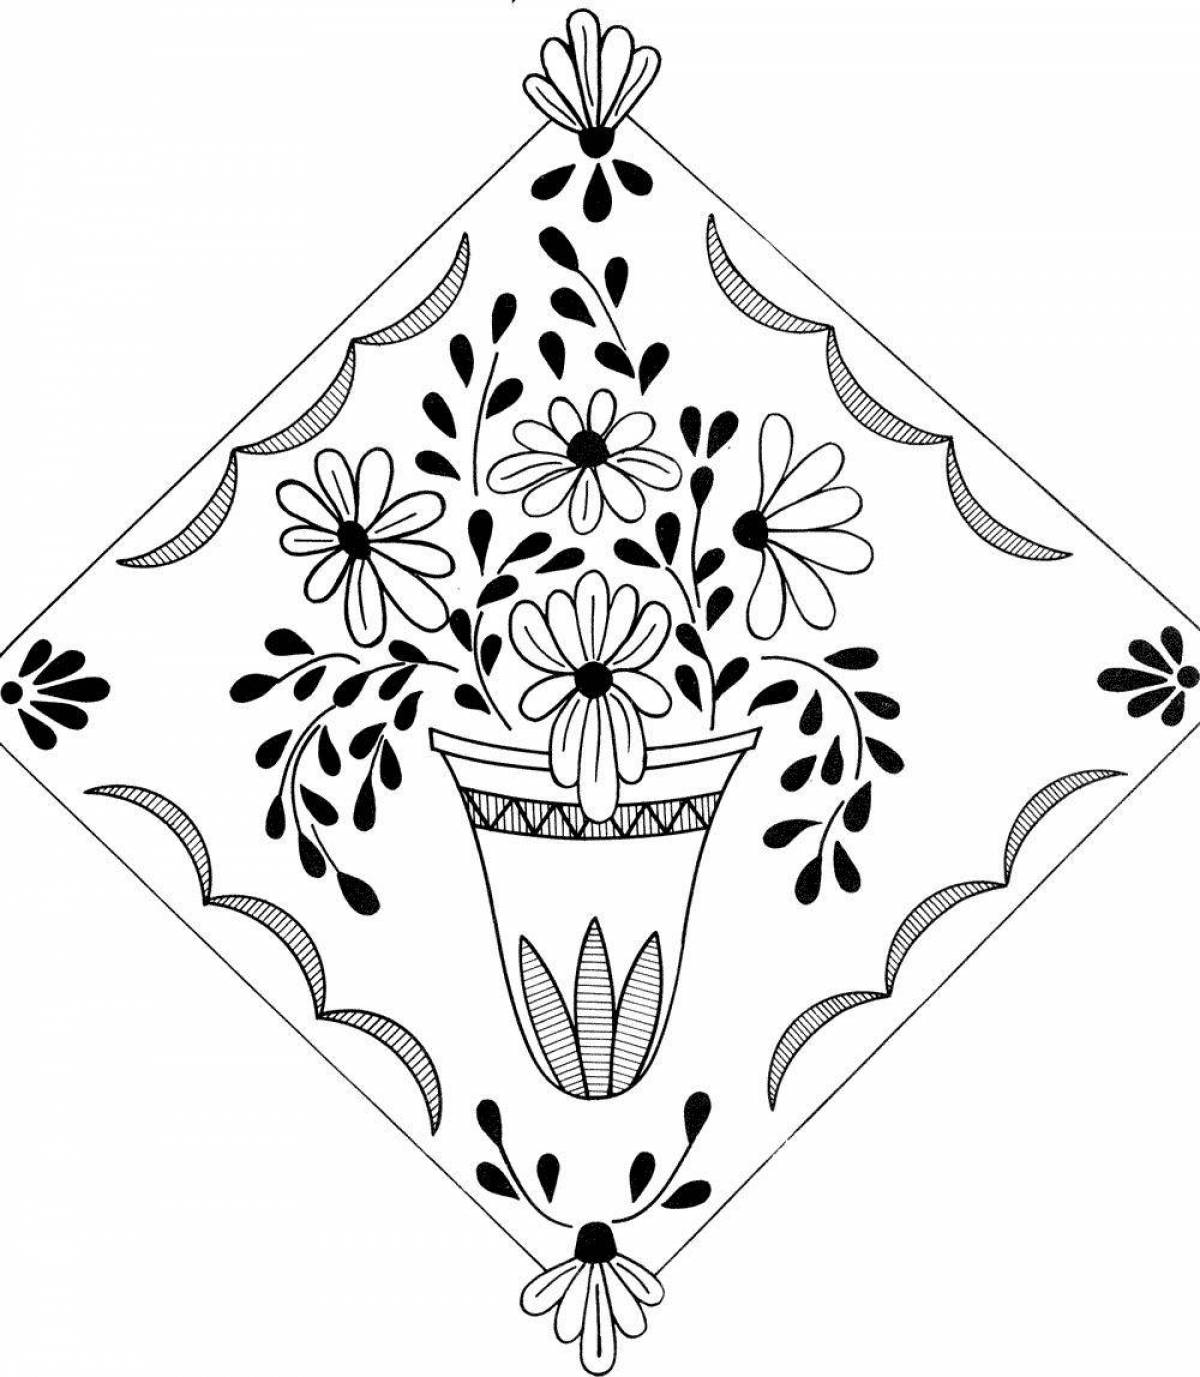 Эскиз орнамента для салфетки